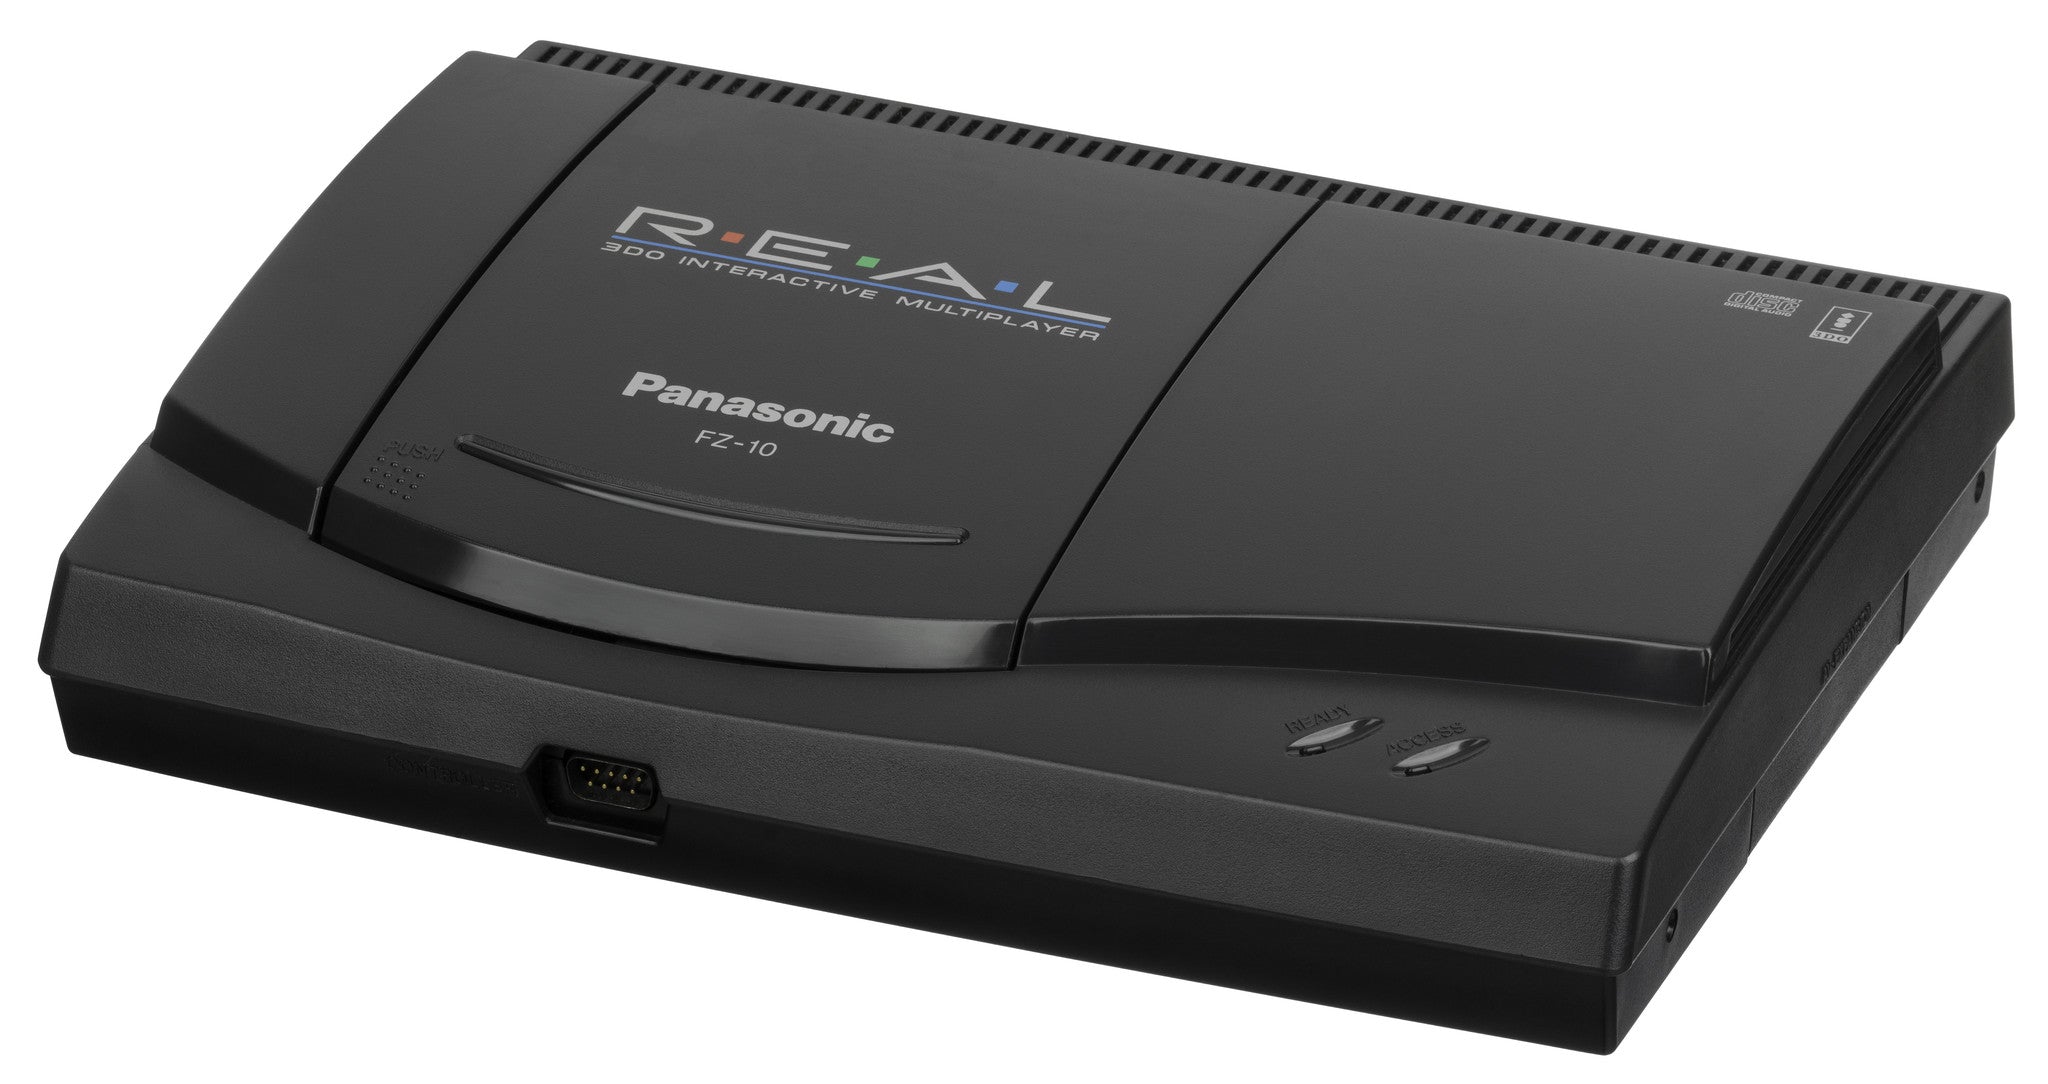 Panasonic 3DO FZ-10 Retropixl Retrogaming retro gaming Rare Console Collector Limited Edition Japan Import